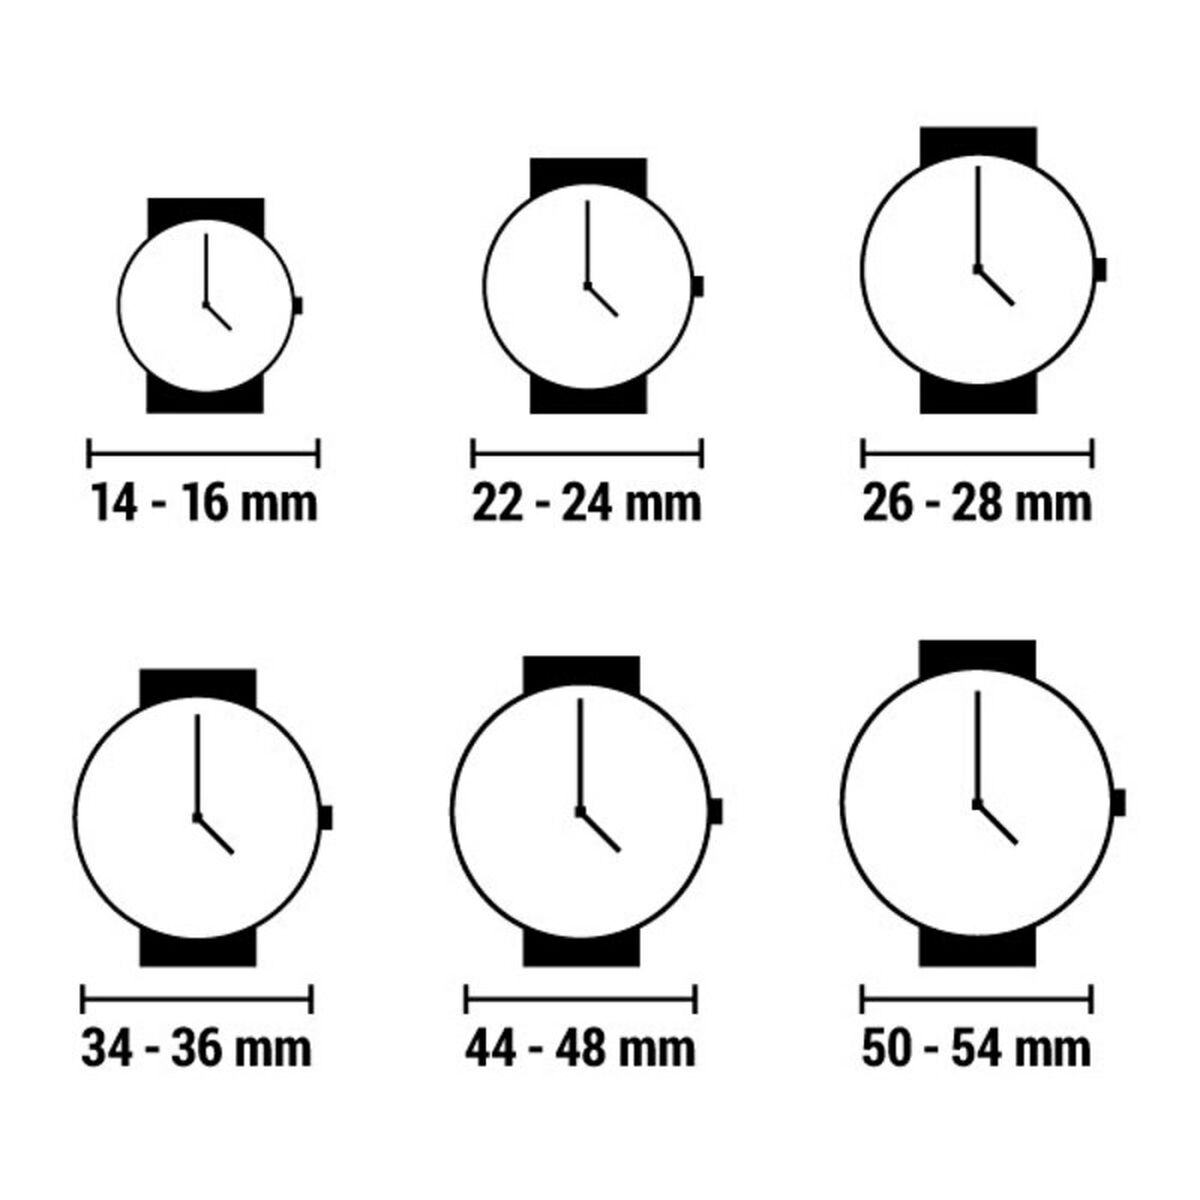 Horloge Dames Montres de Luxe 09EX-L8302 (Ø 35 mm)